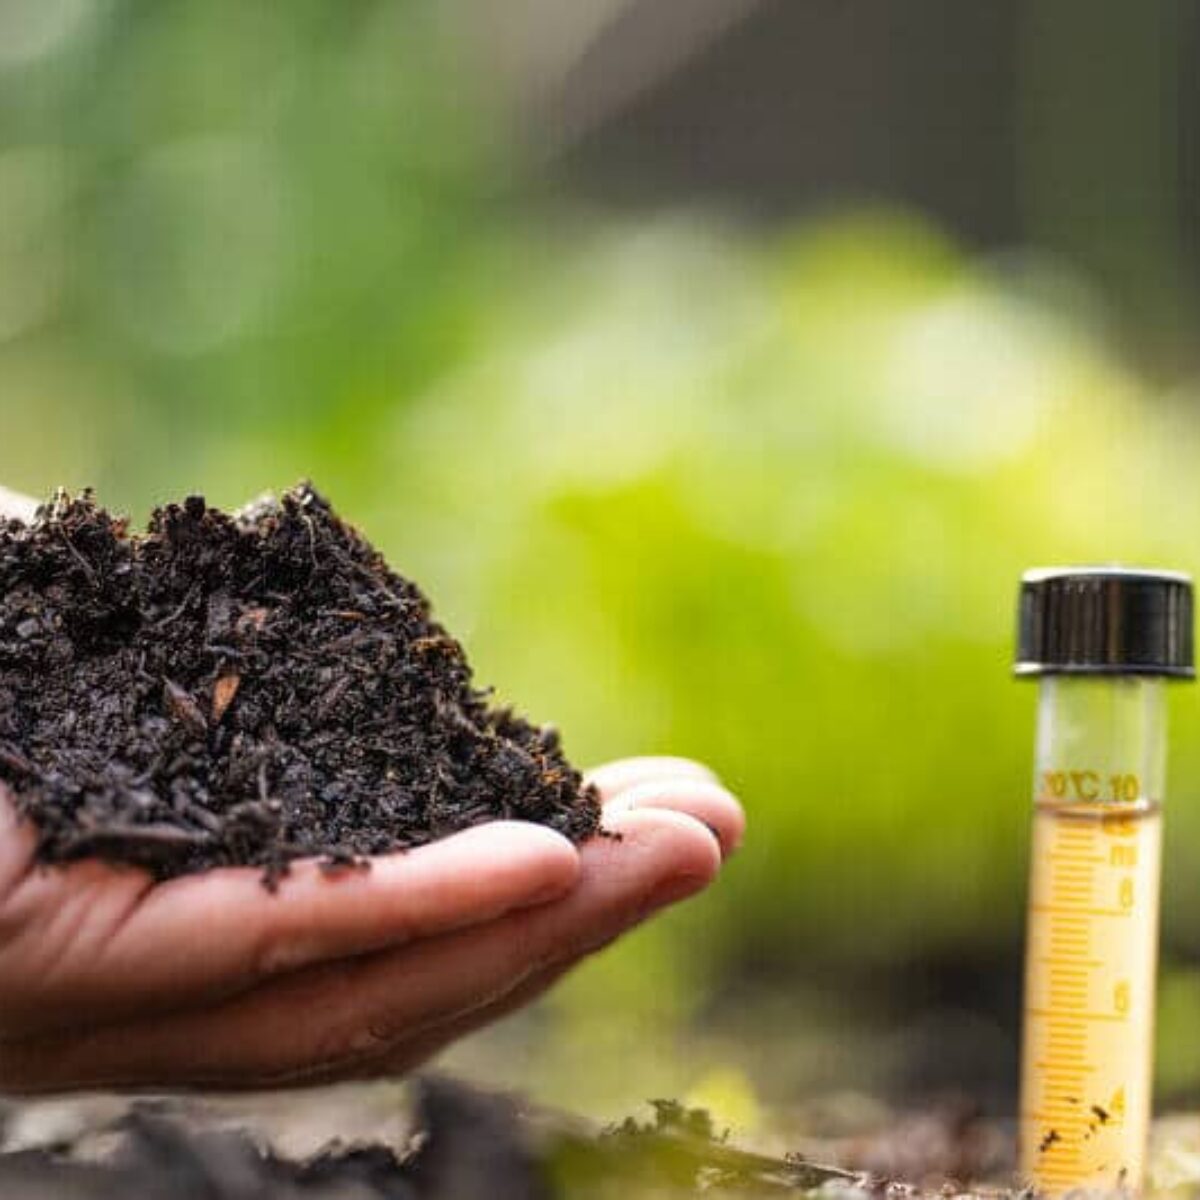 soil regenerative production with testing tube